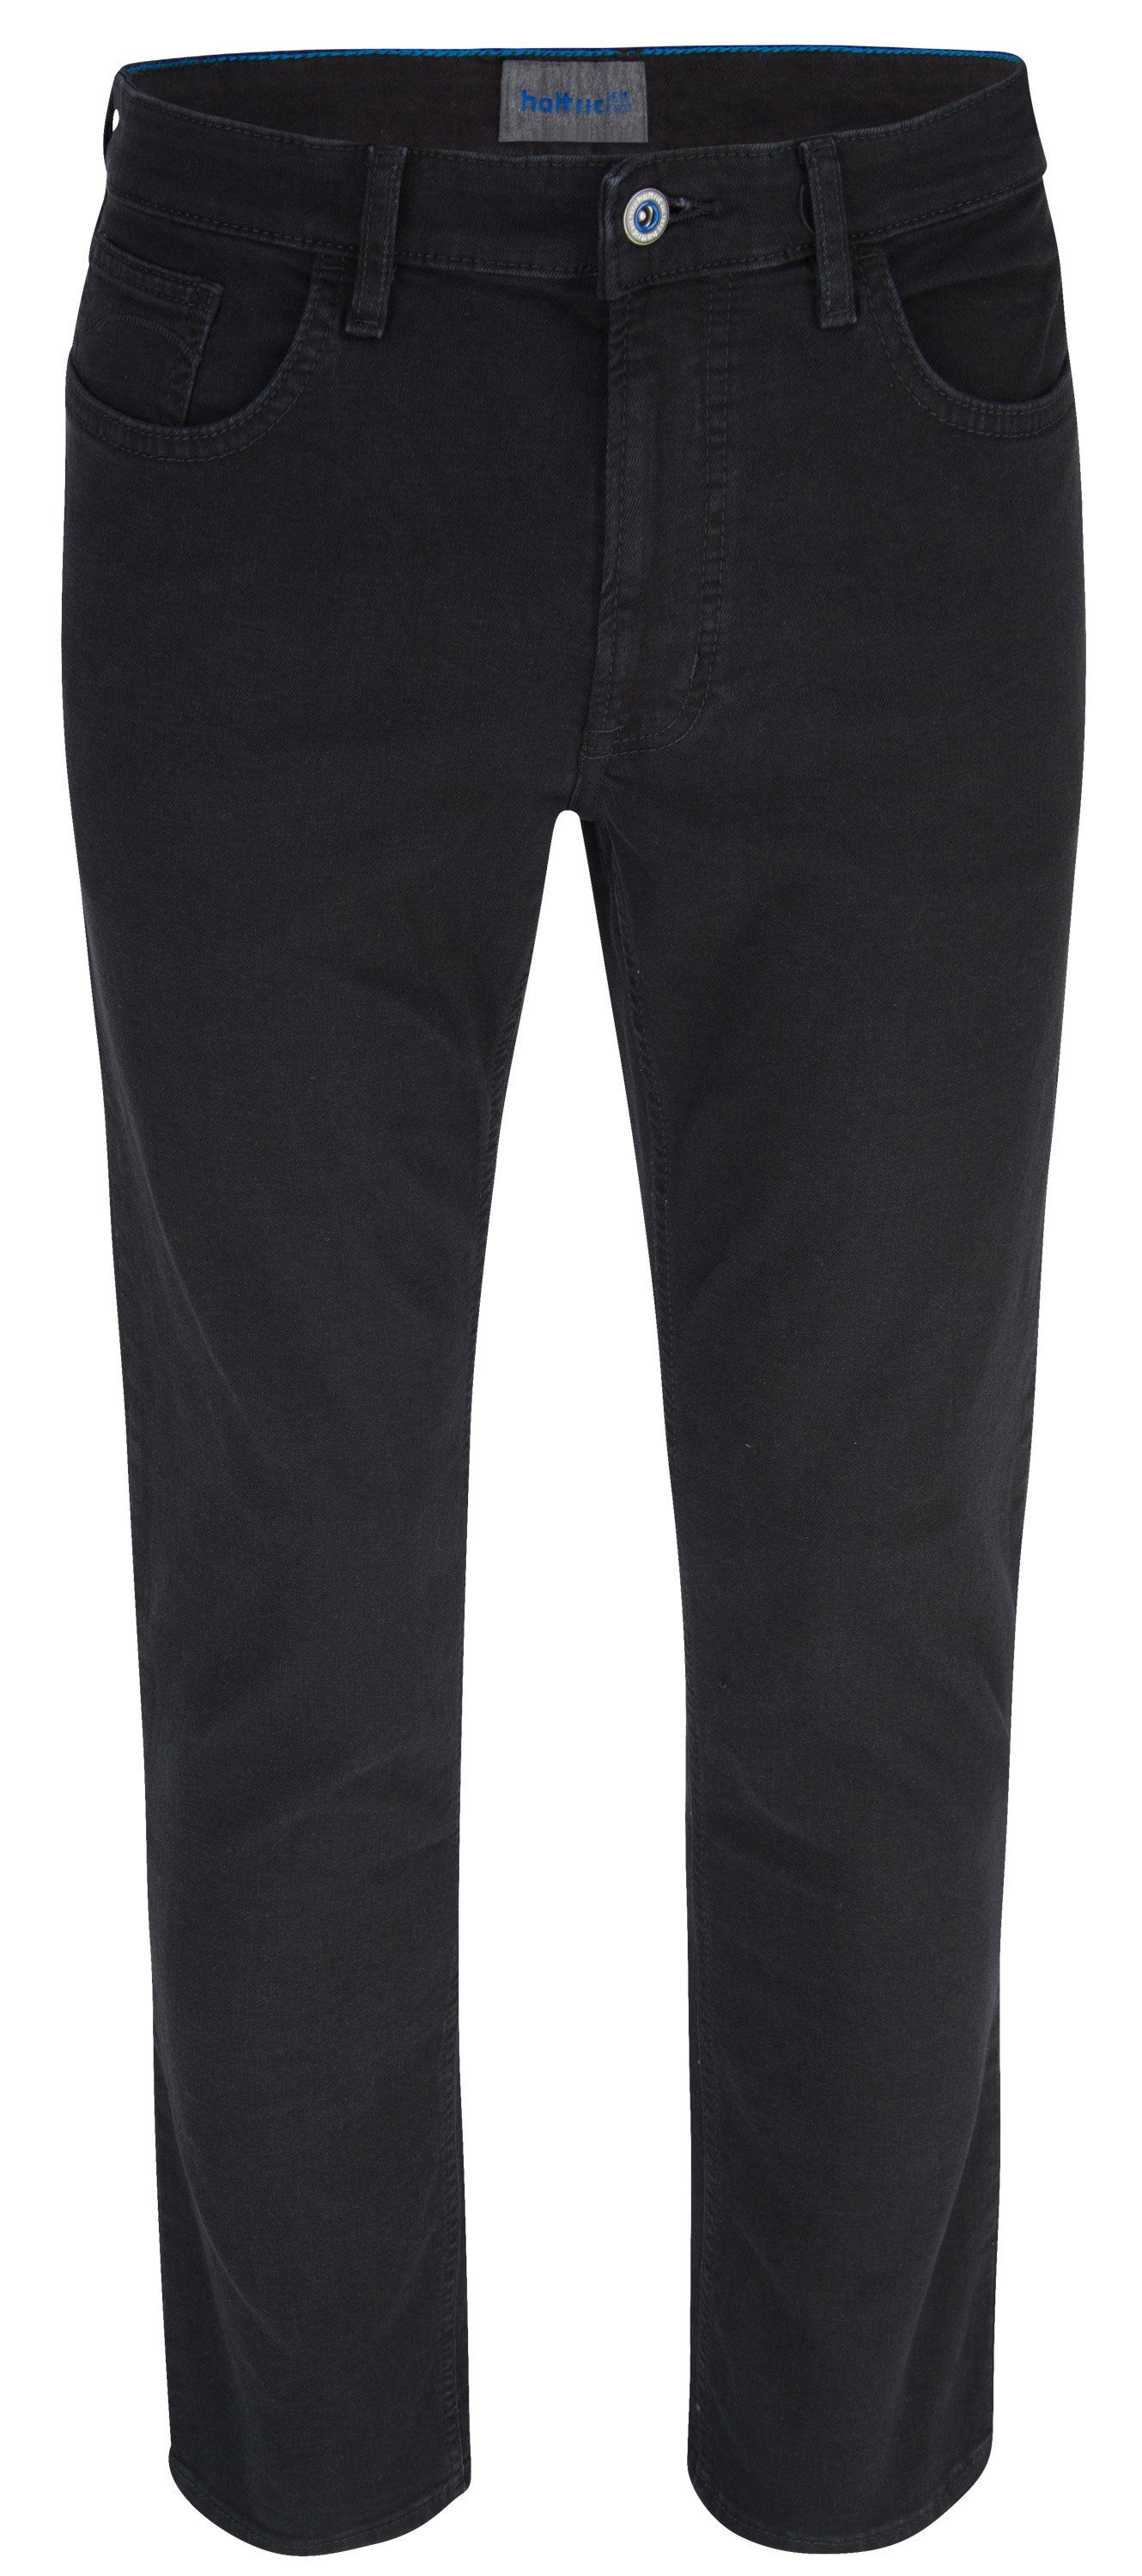 Hattric 5-Pocket-Jeans HATTRIC HUNTER black washed out 688525 9214.06